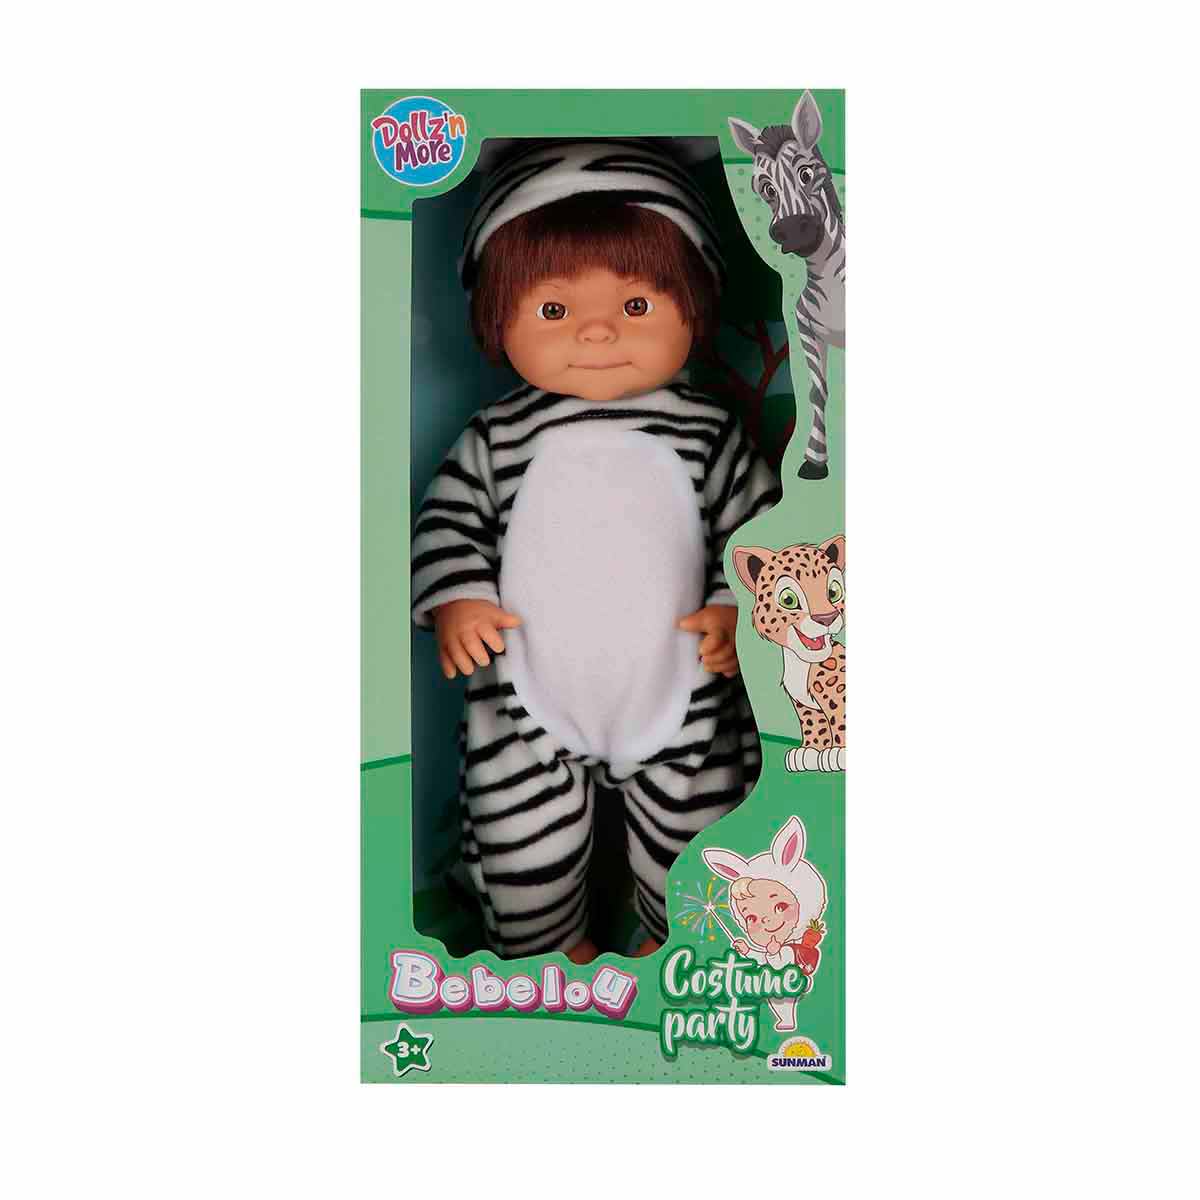 Papusa Bebelou in costum de zebra, Dollz And More, 40 cm and imagine noua responsabilitatesociala.ro